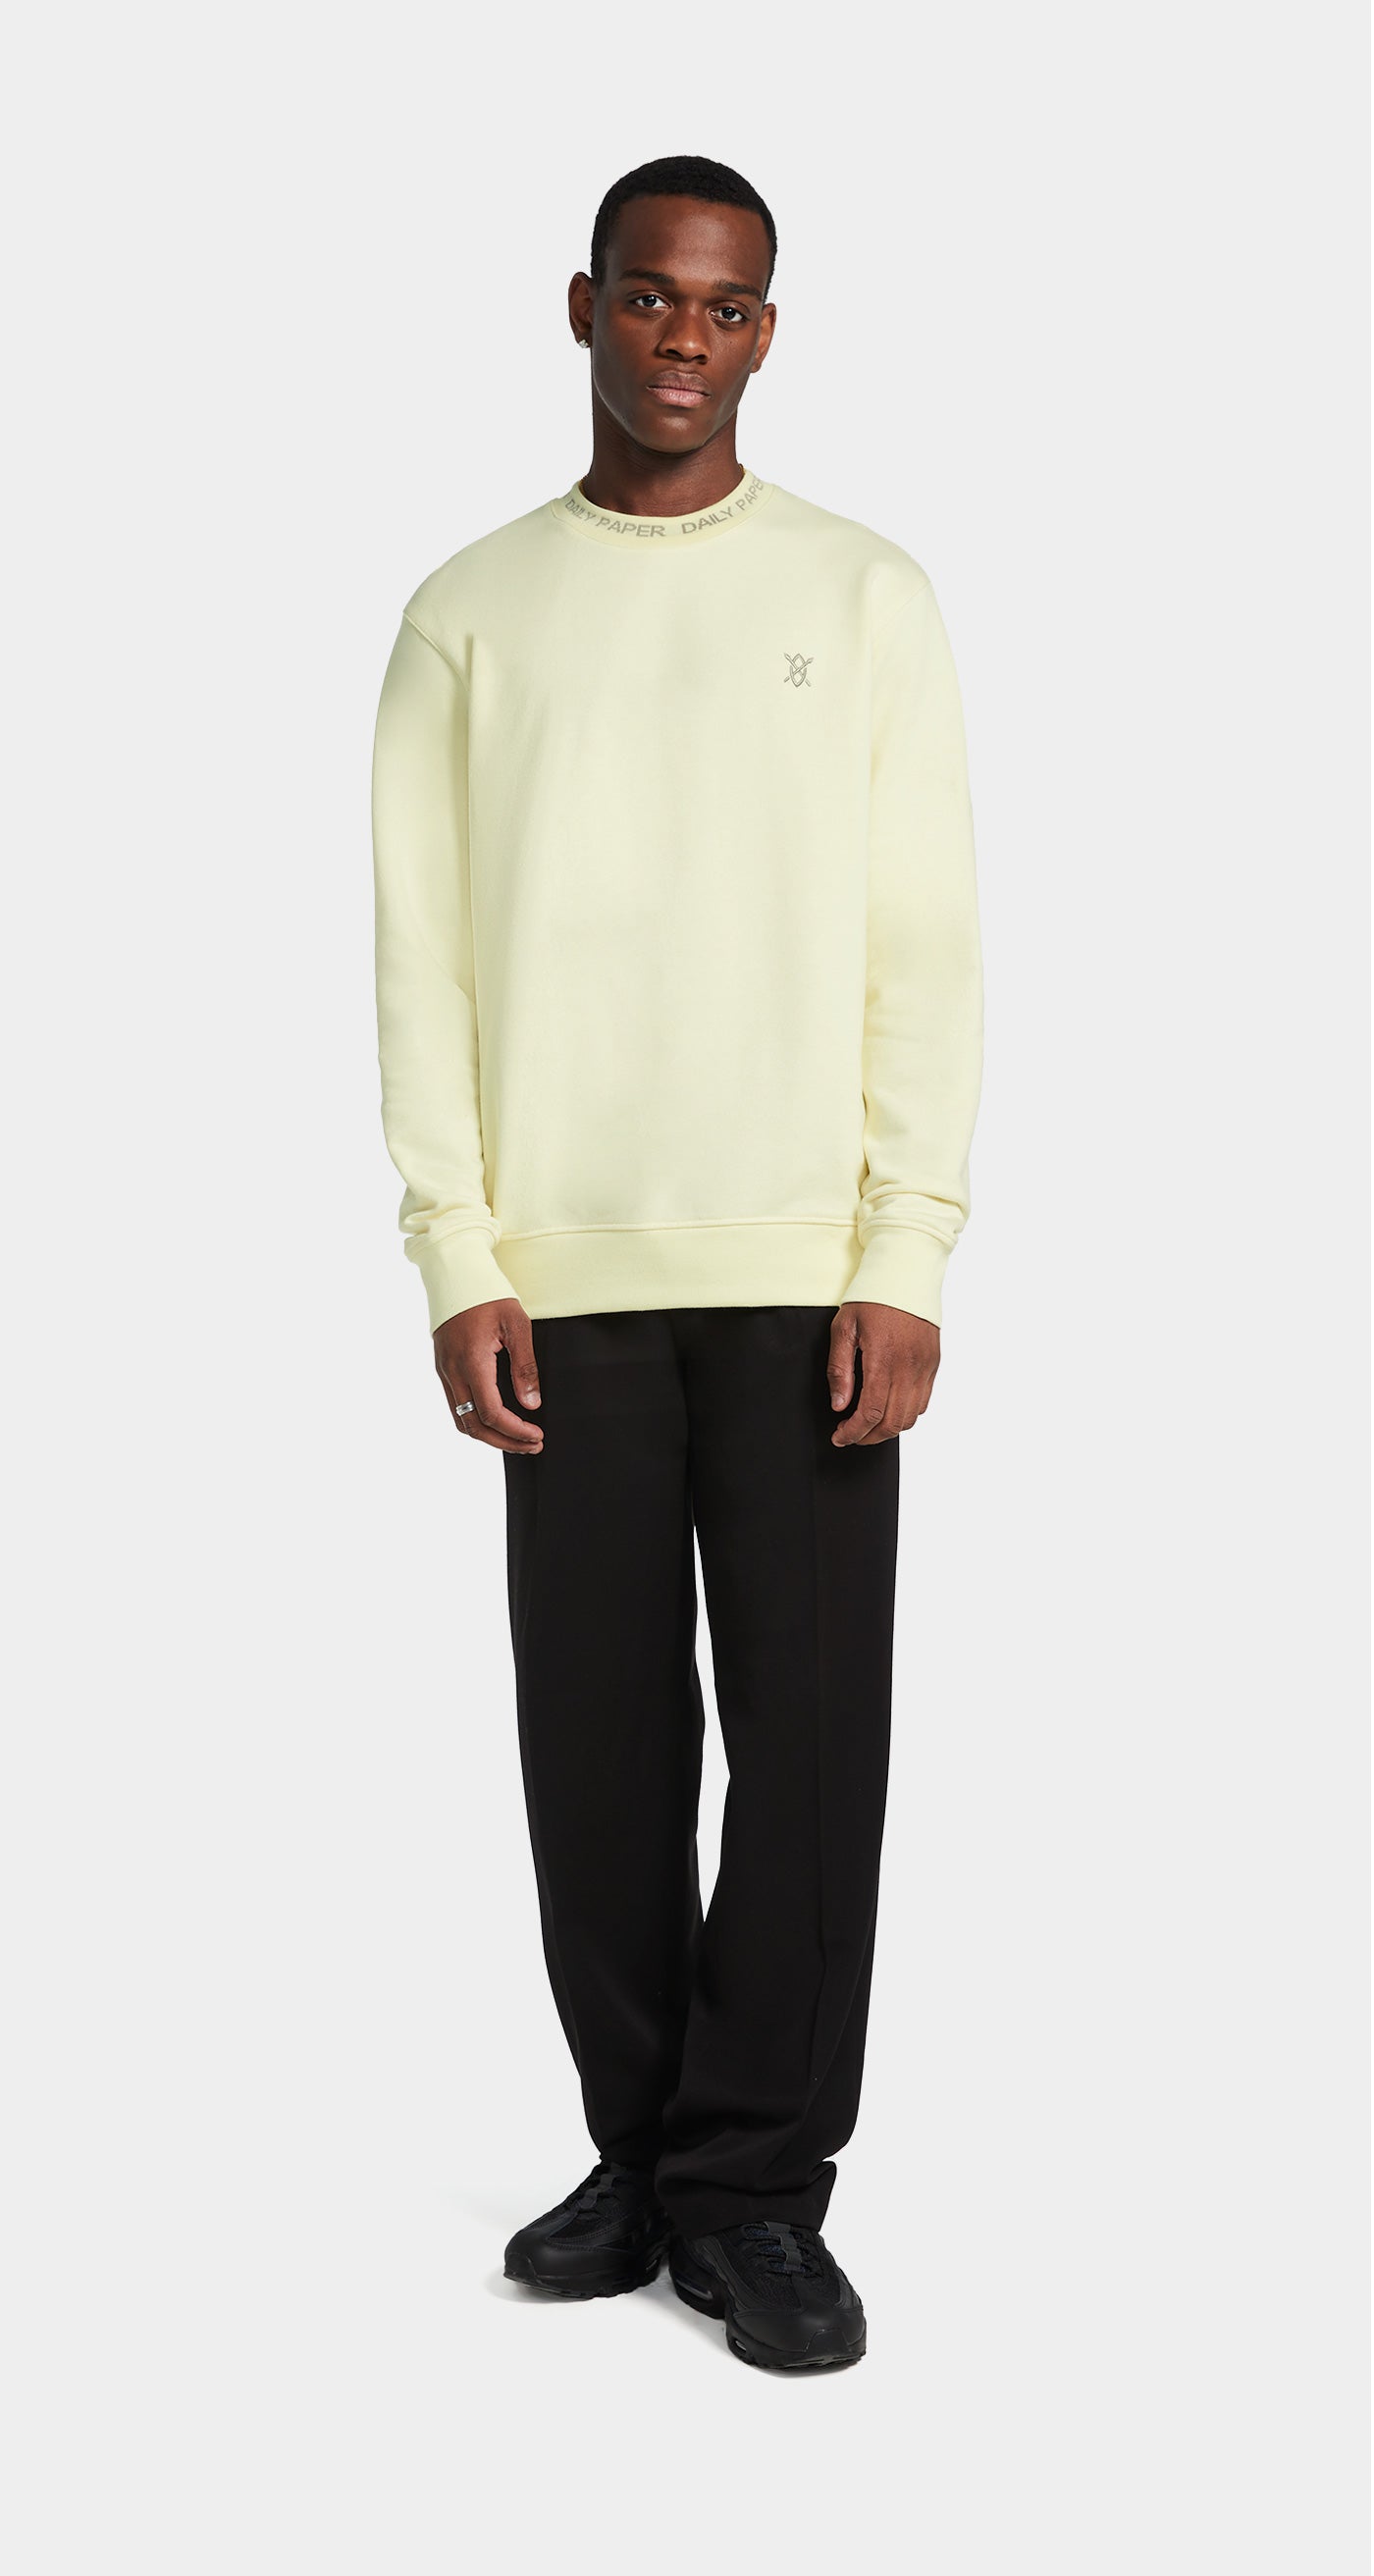 DP - Icing Yellow Erib Sweater - Men - Front